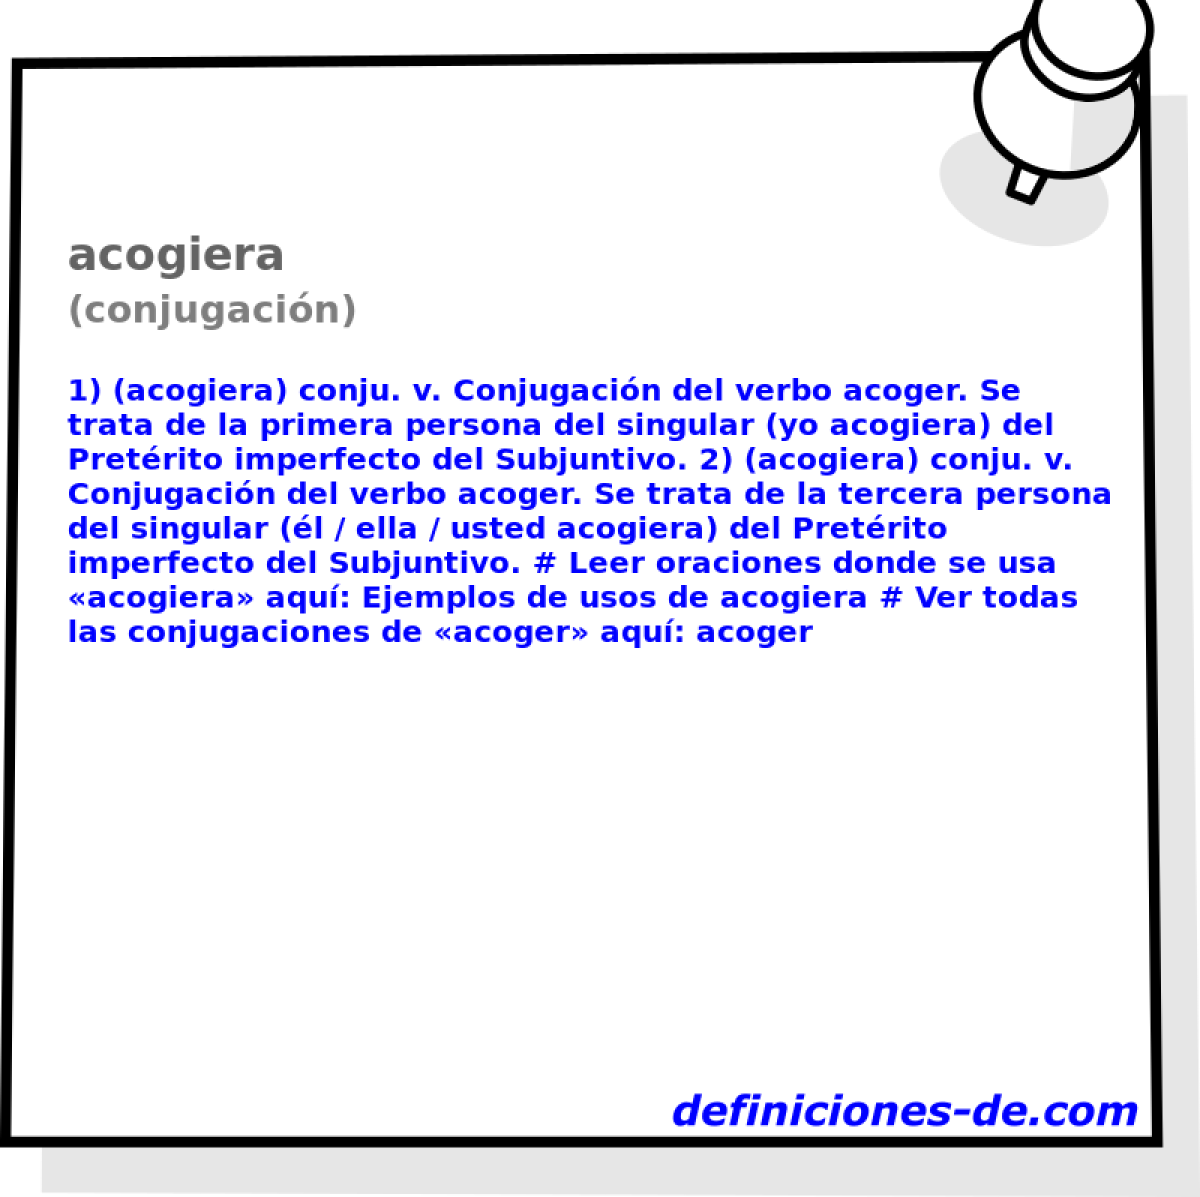 acogiera (conjugacin)